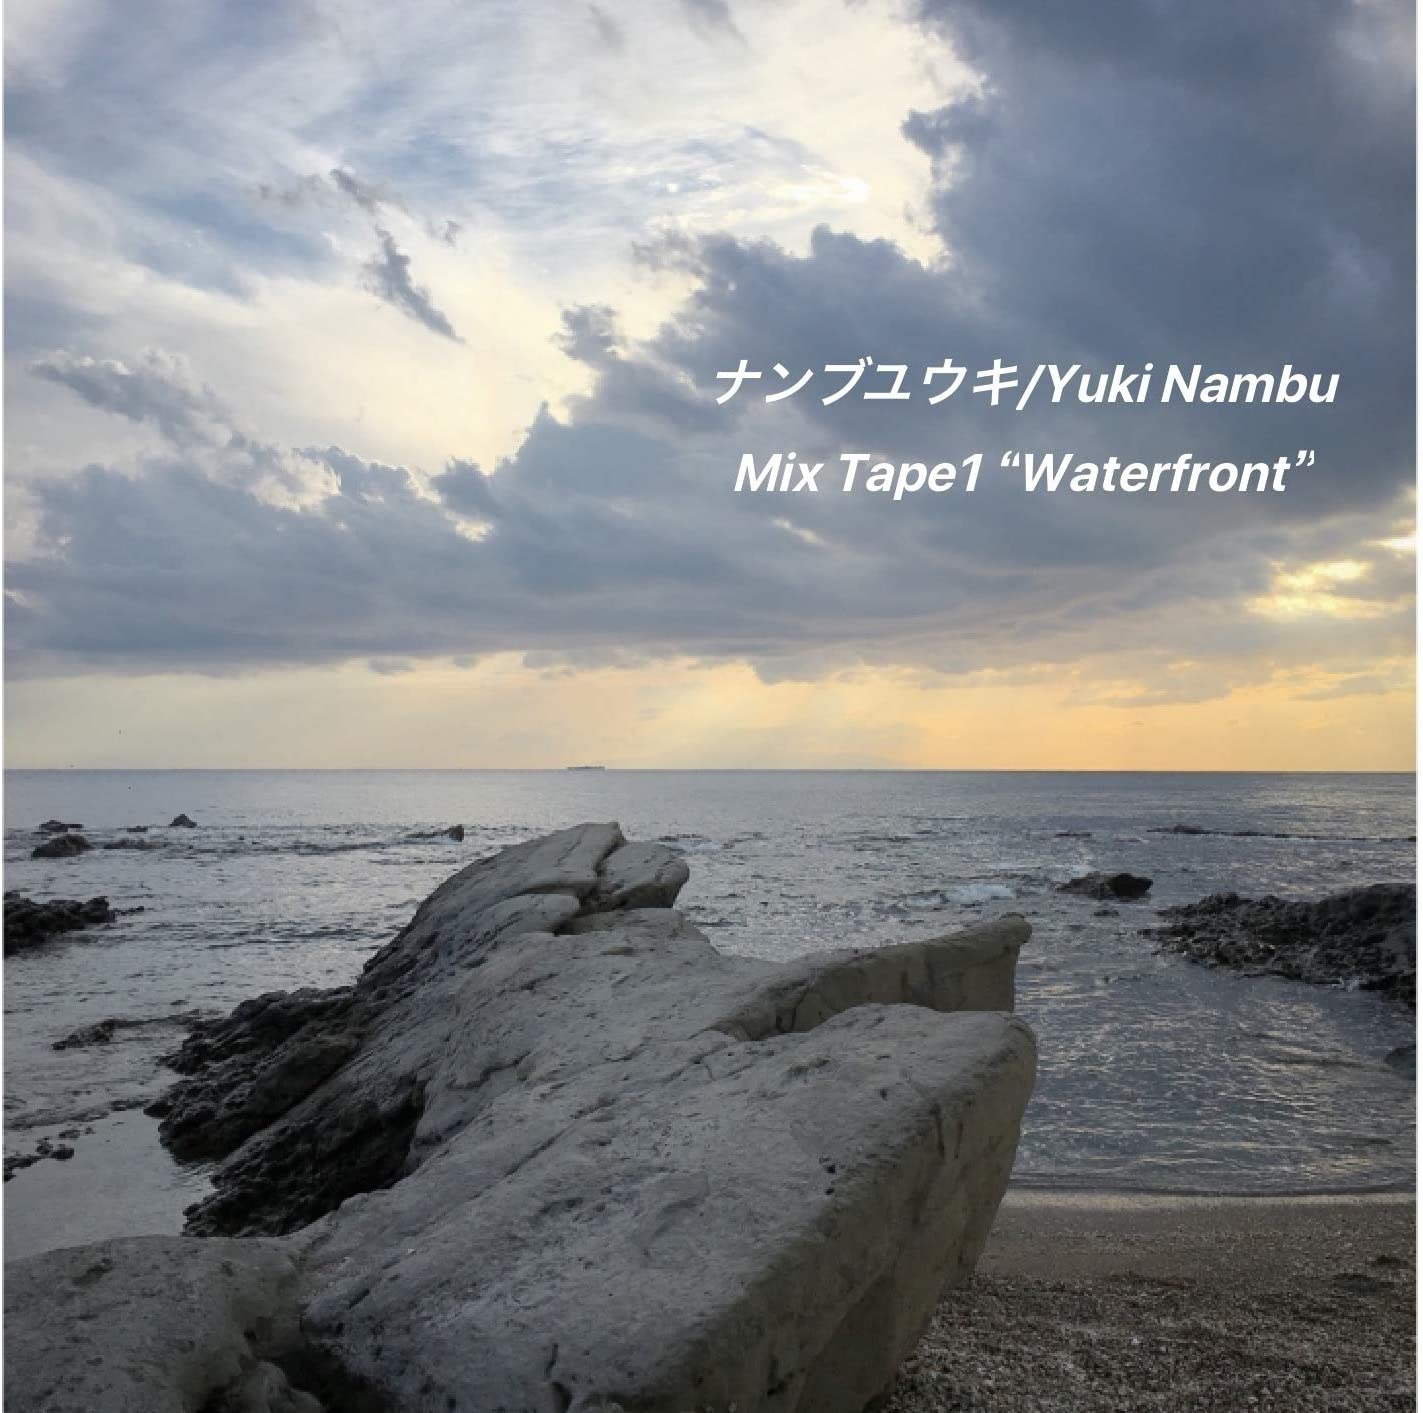 Mix Tape1 “Waterfront”